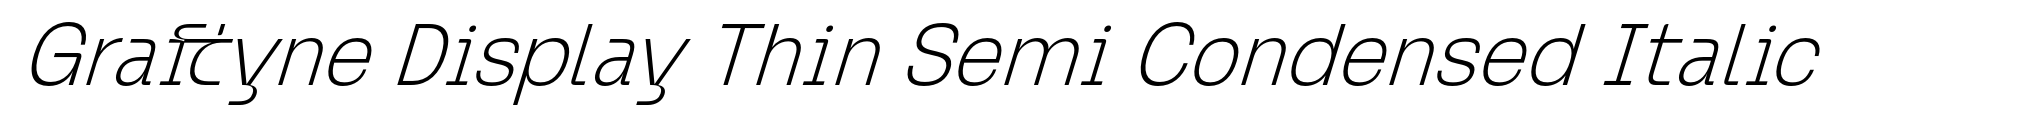 Graftyne Display Thin Semi Condensed Italic image